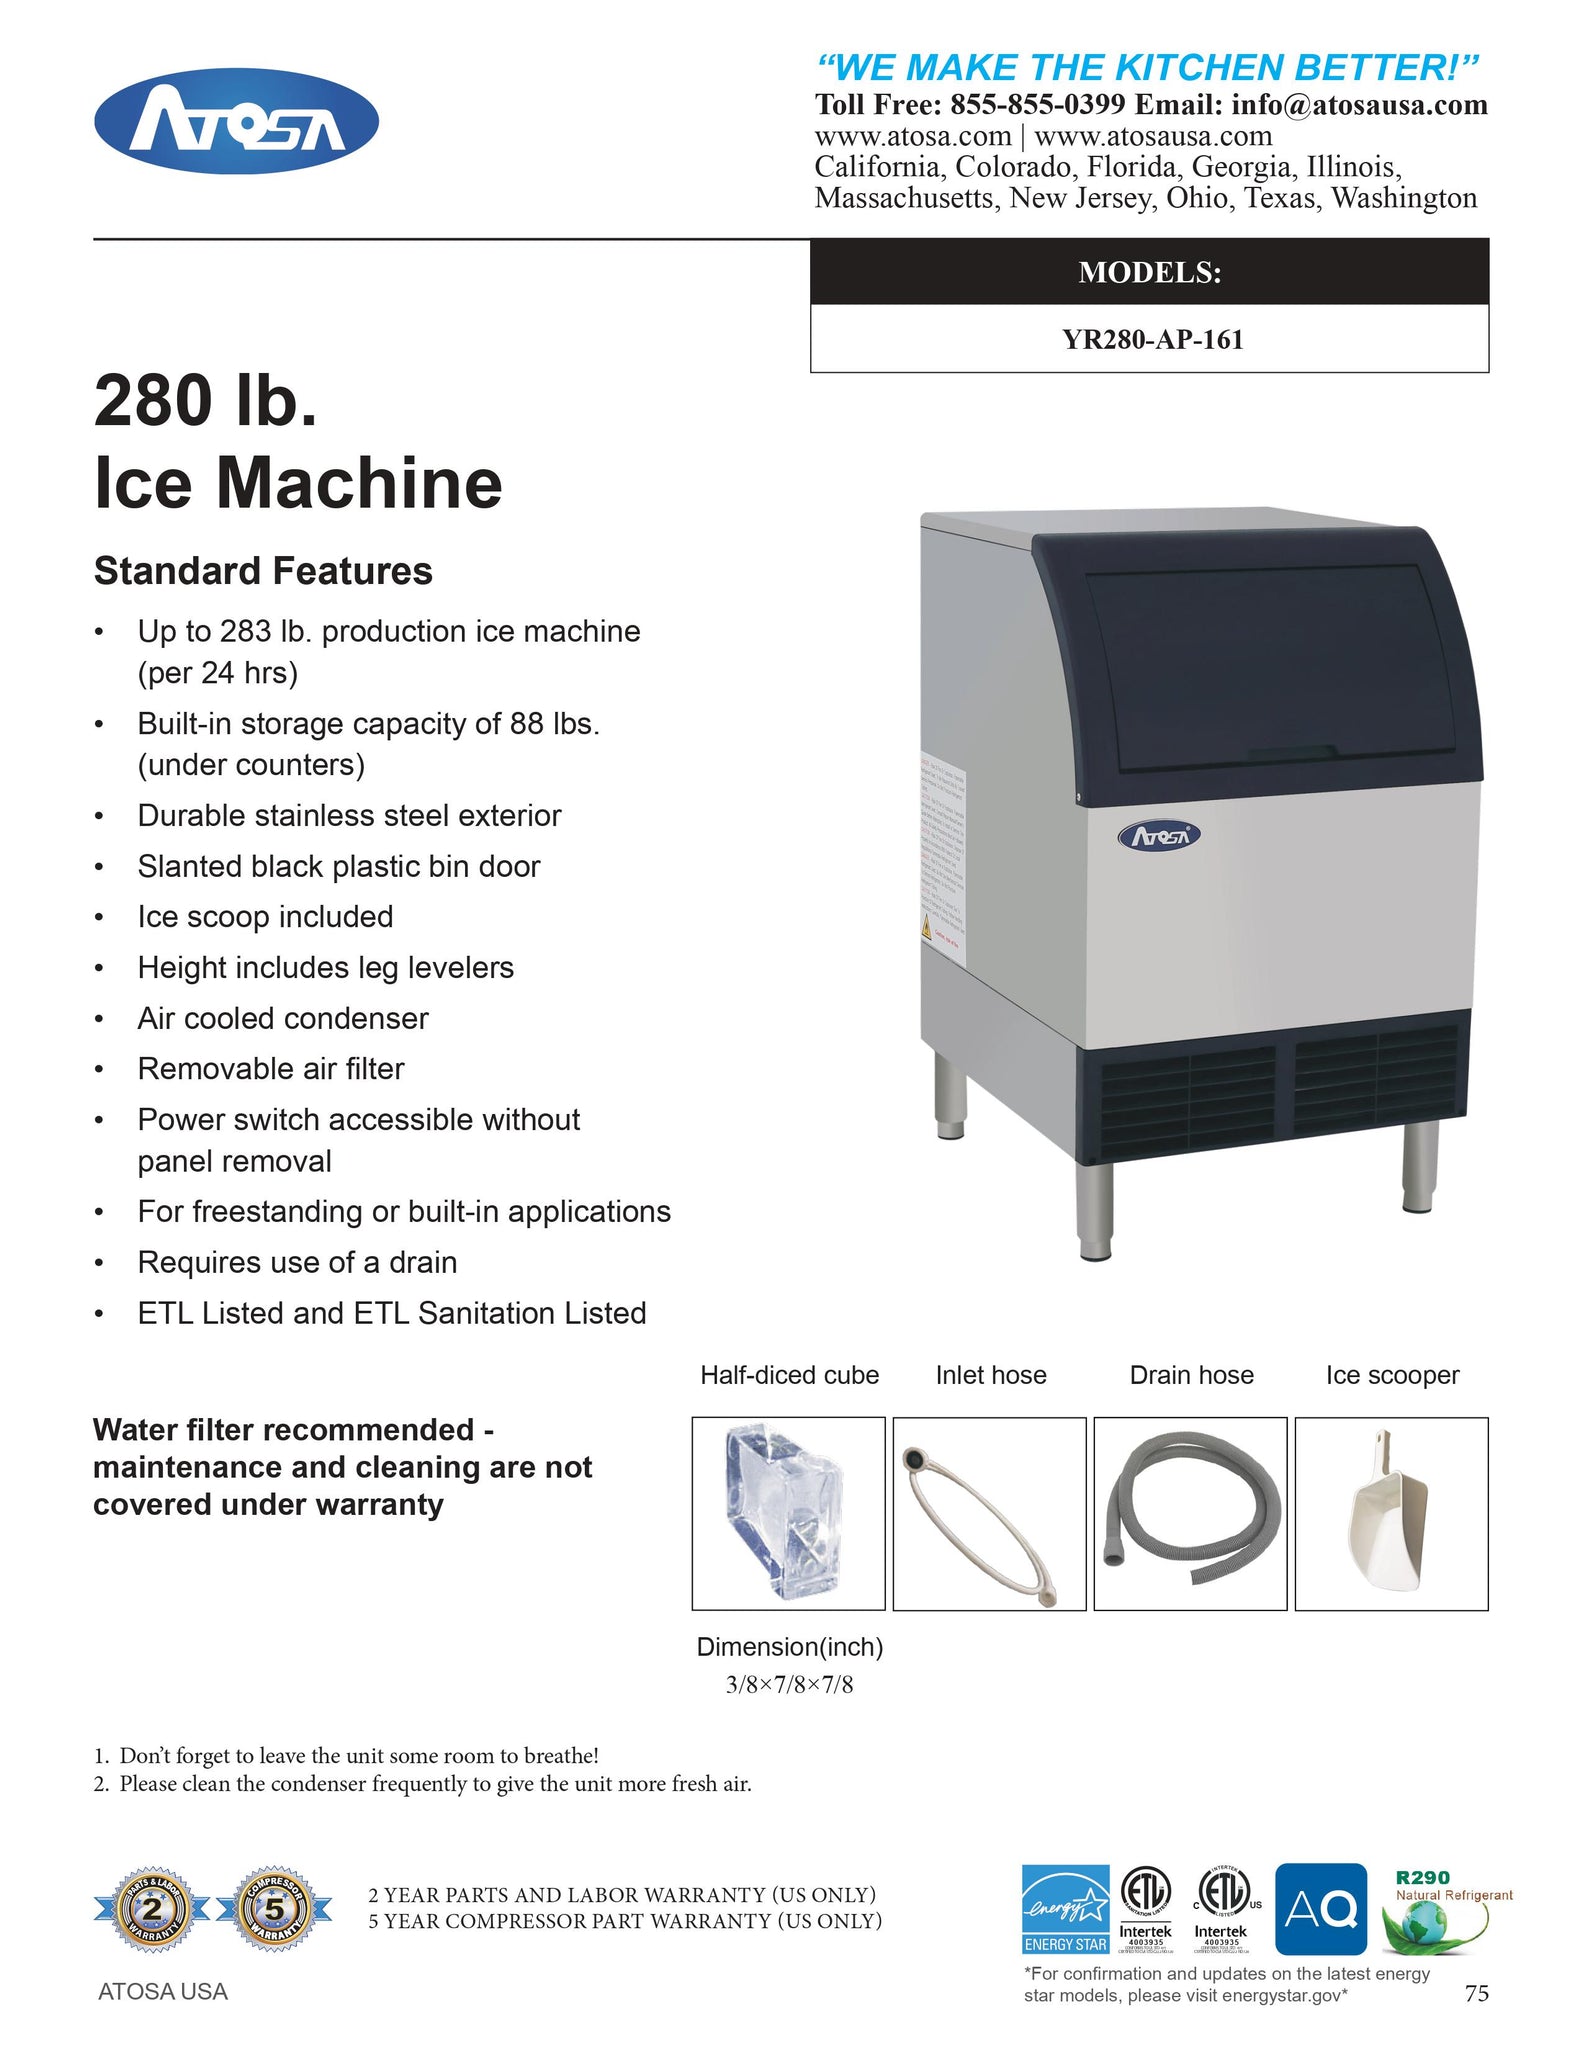 Atosa YR280-AP-161 24" Air Cooler Undercounter Full Dice Ice Machine - 283 lb.